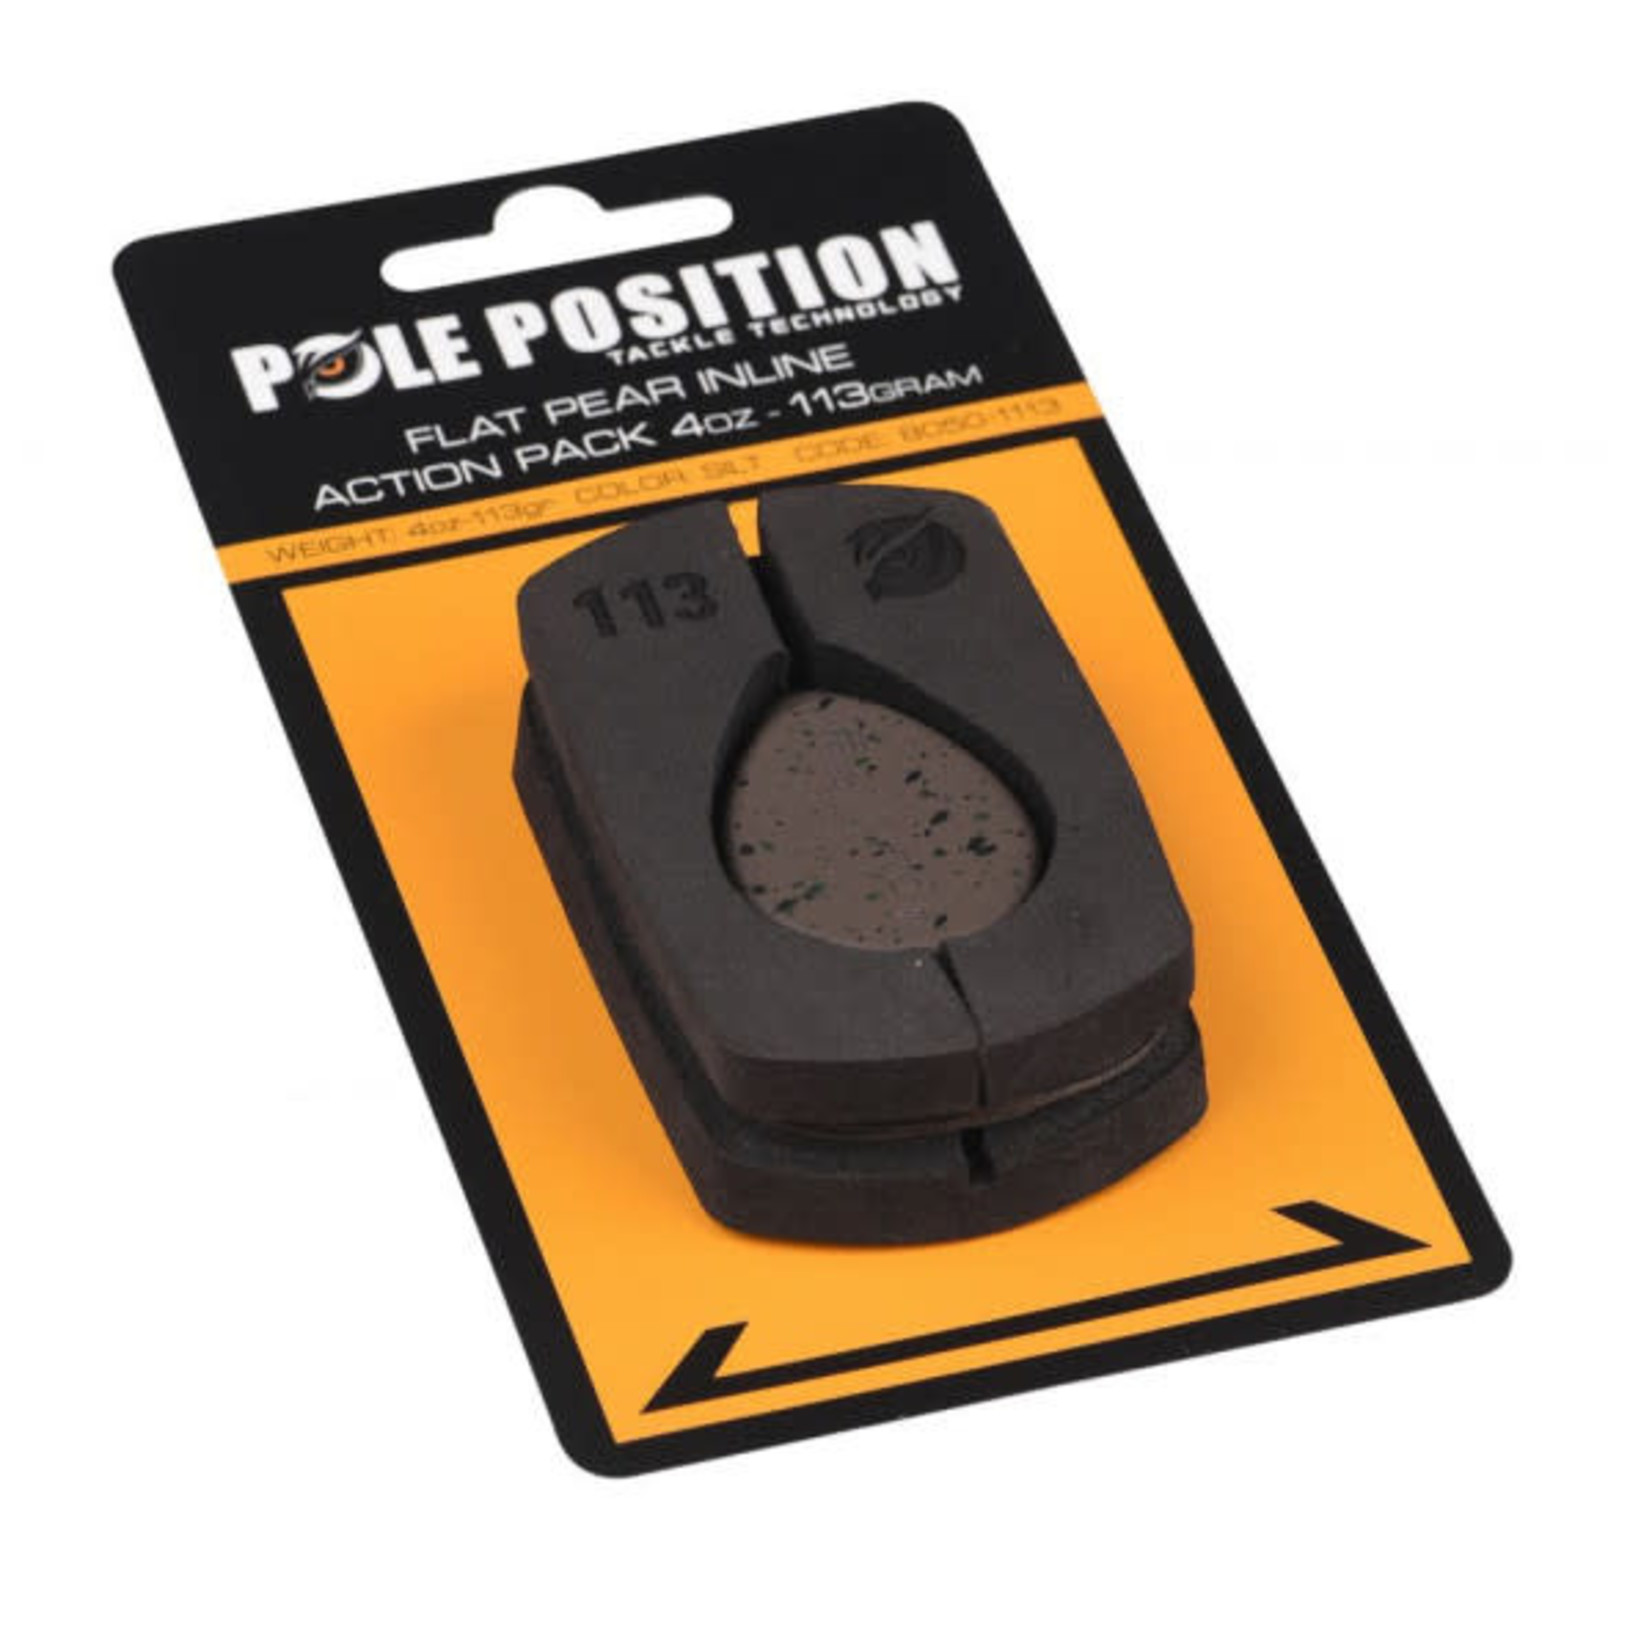 POLE POSITION Pole Position  FLAT PEAR INLINE ACTION PACK 4OZ-113GR